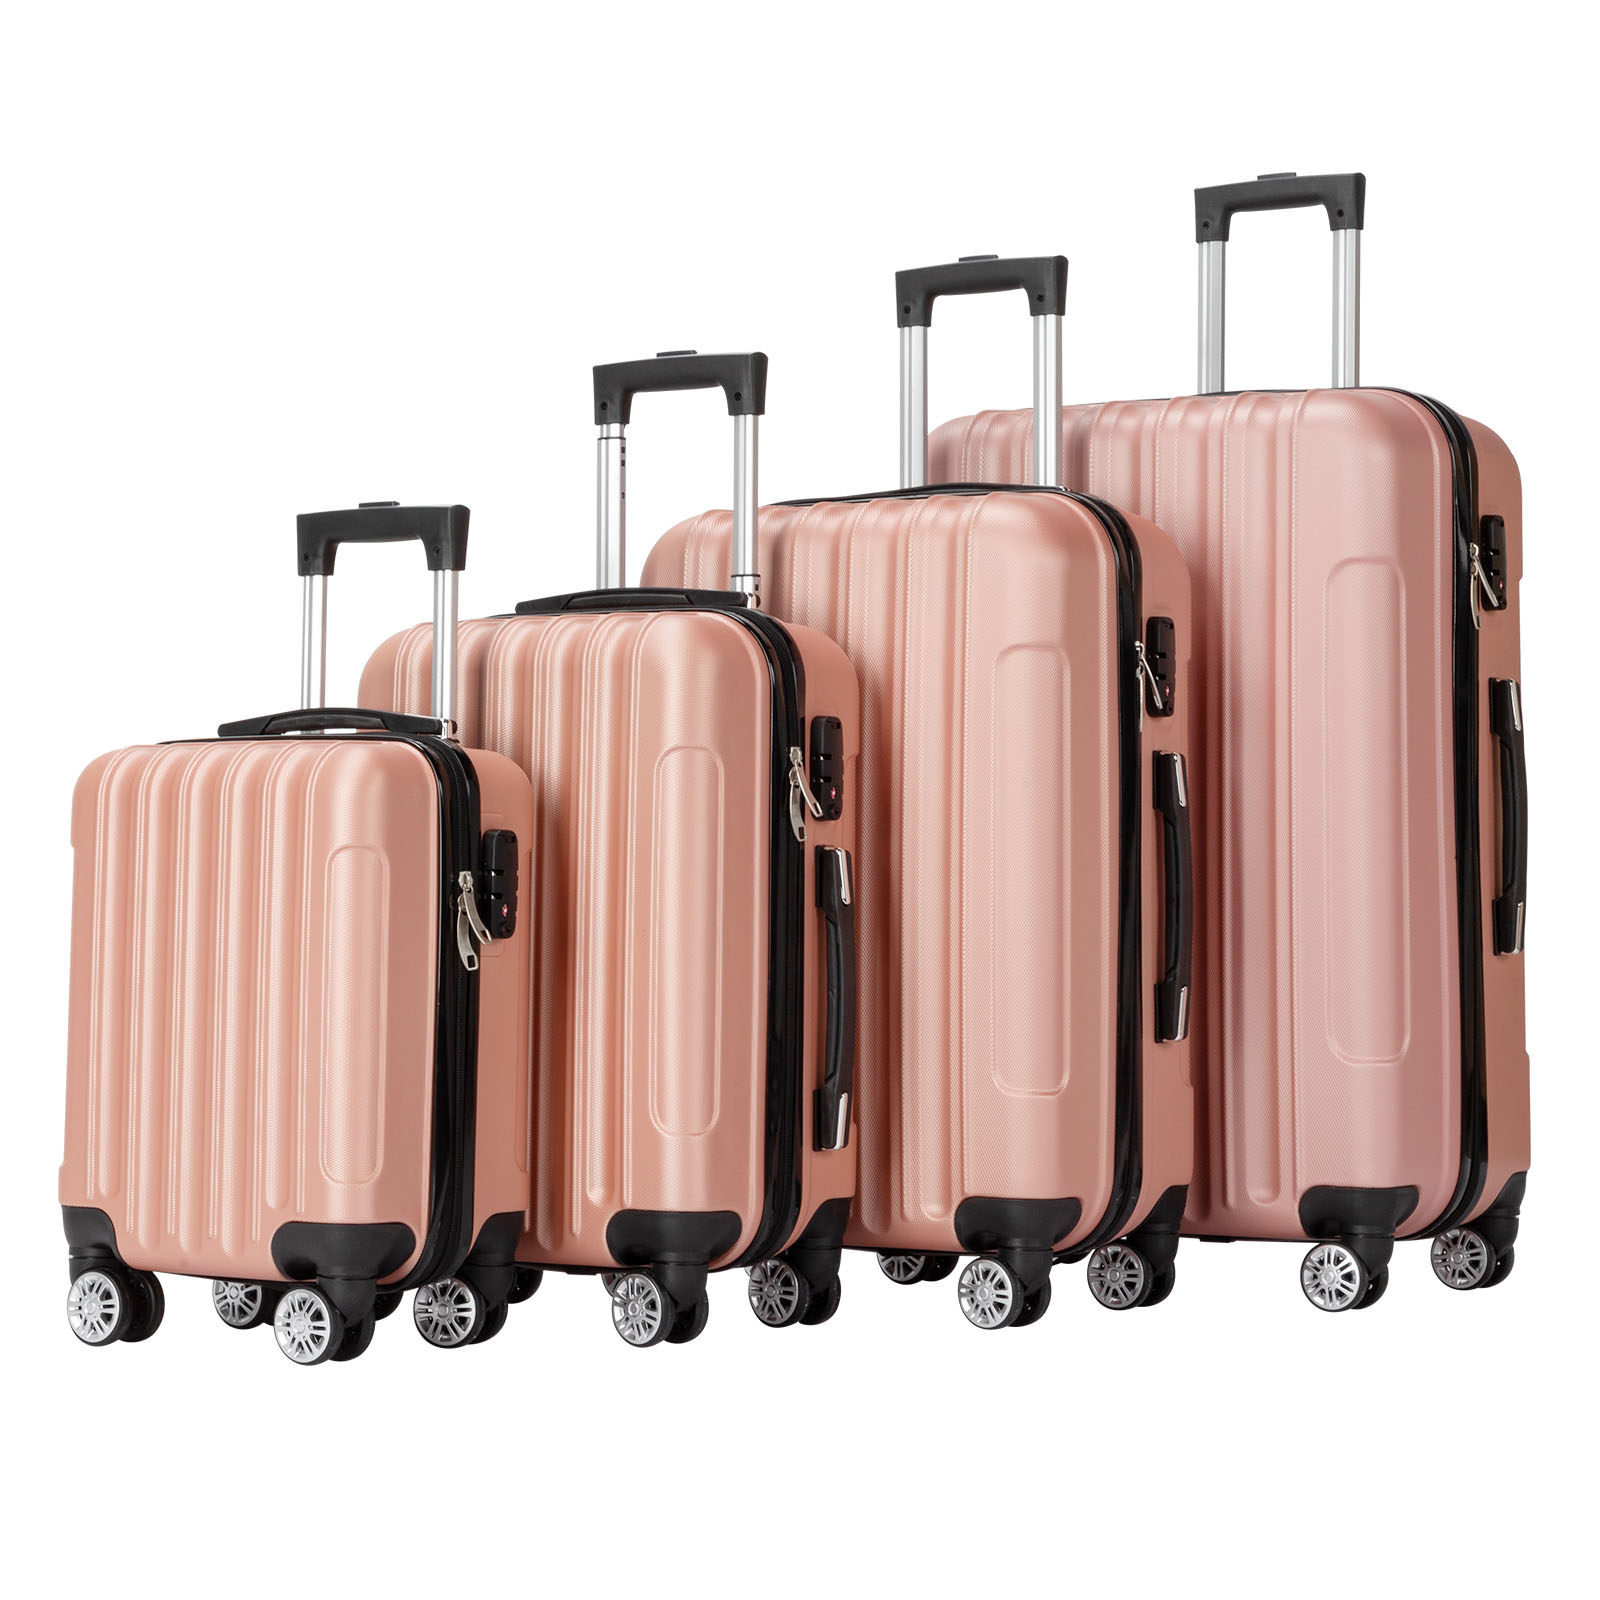 Zimtown 4 Pcs Luggage Set, Durable Travelable Suitcase with Double Wheels and TSA Lock Rose Gold - image 1 of 8